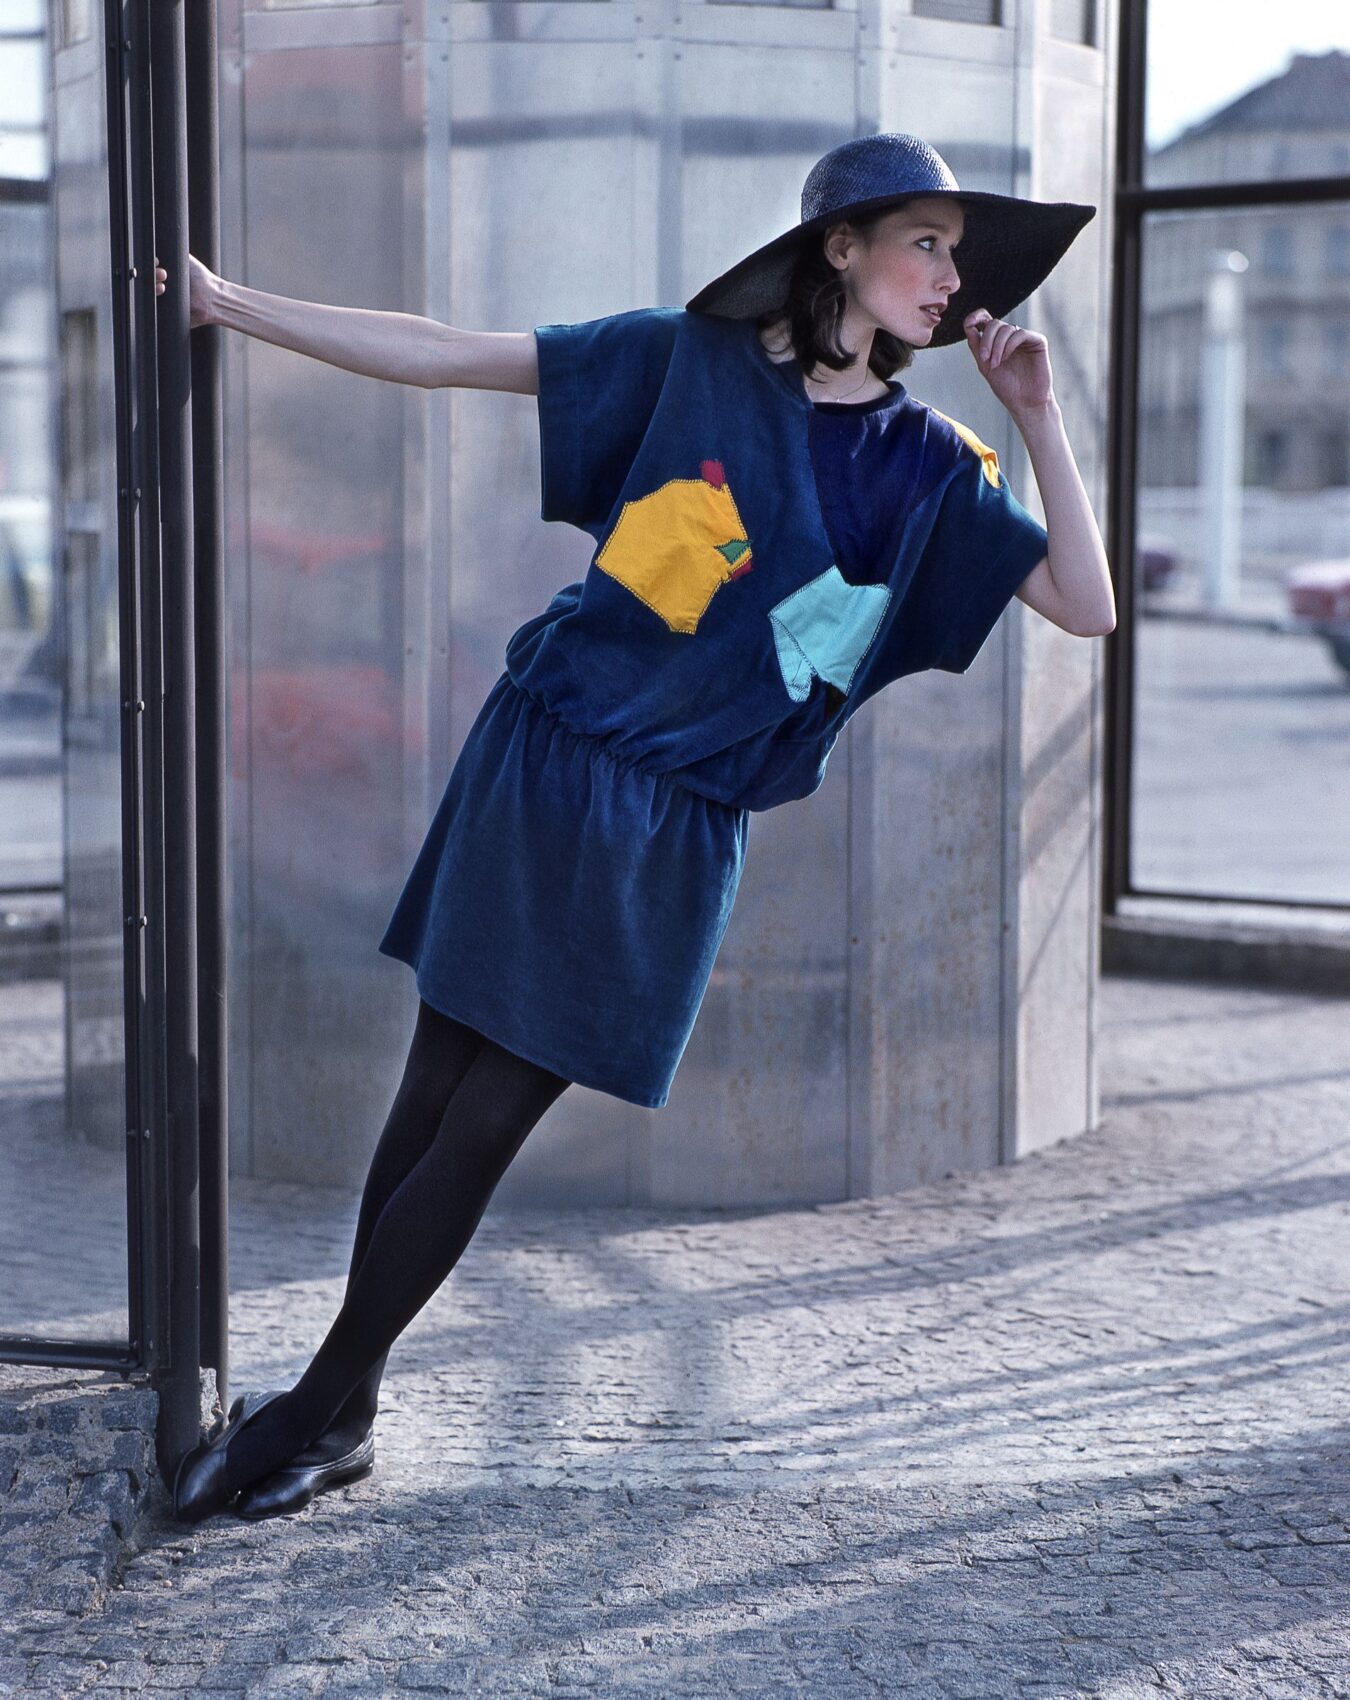 Modelka v klobouku na fotografii Petry Skoupilové